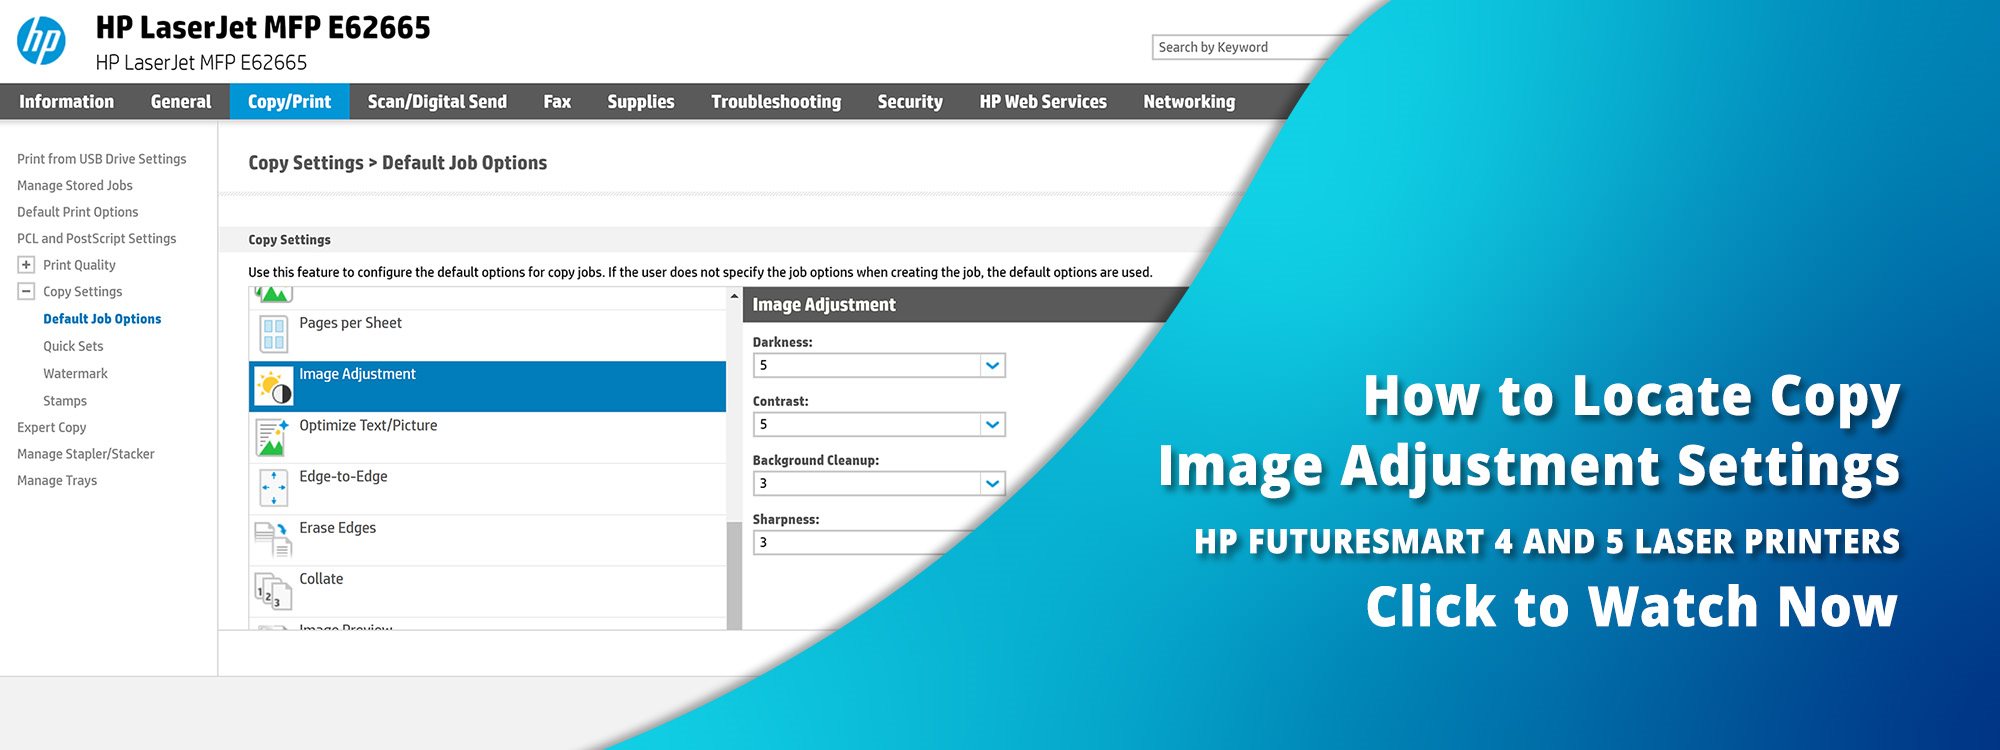 HP FutureSmart 4 and 5 Copy Image Adjustment Video